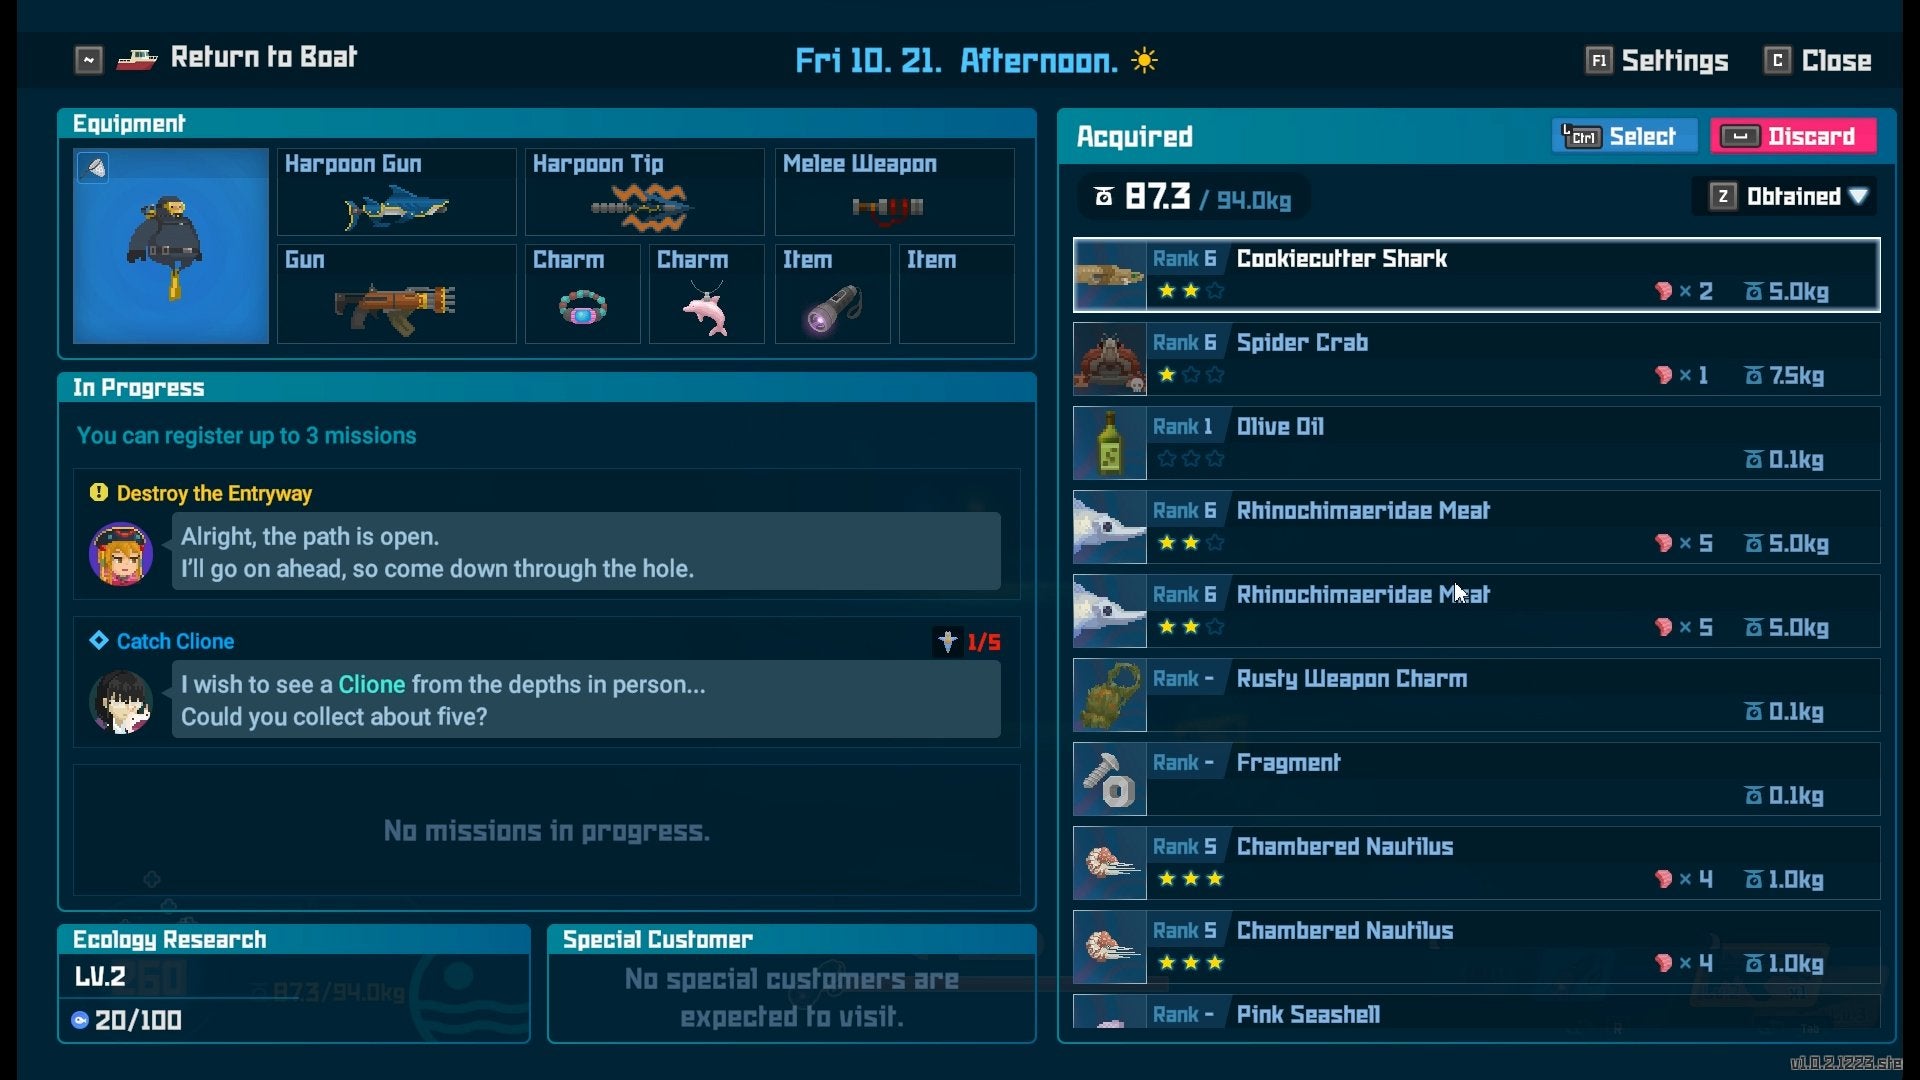 A Cookiecutter Shark in the player's inventory.